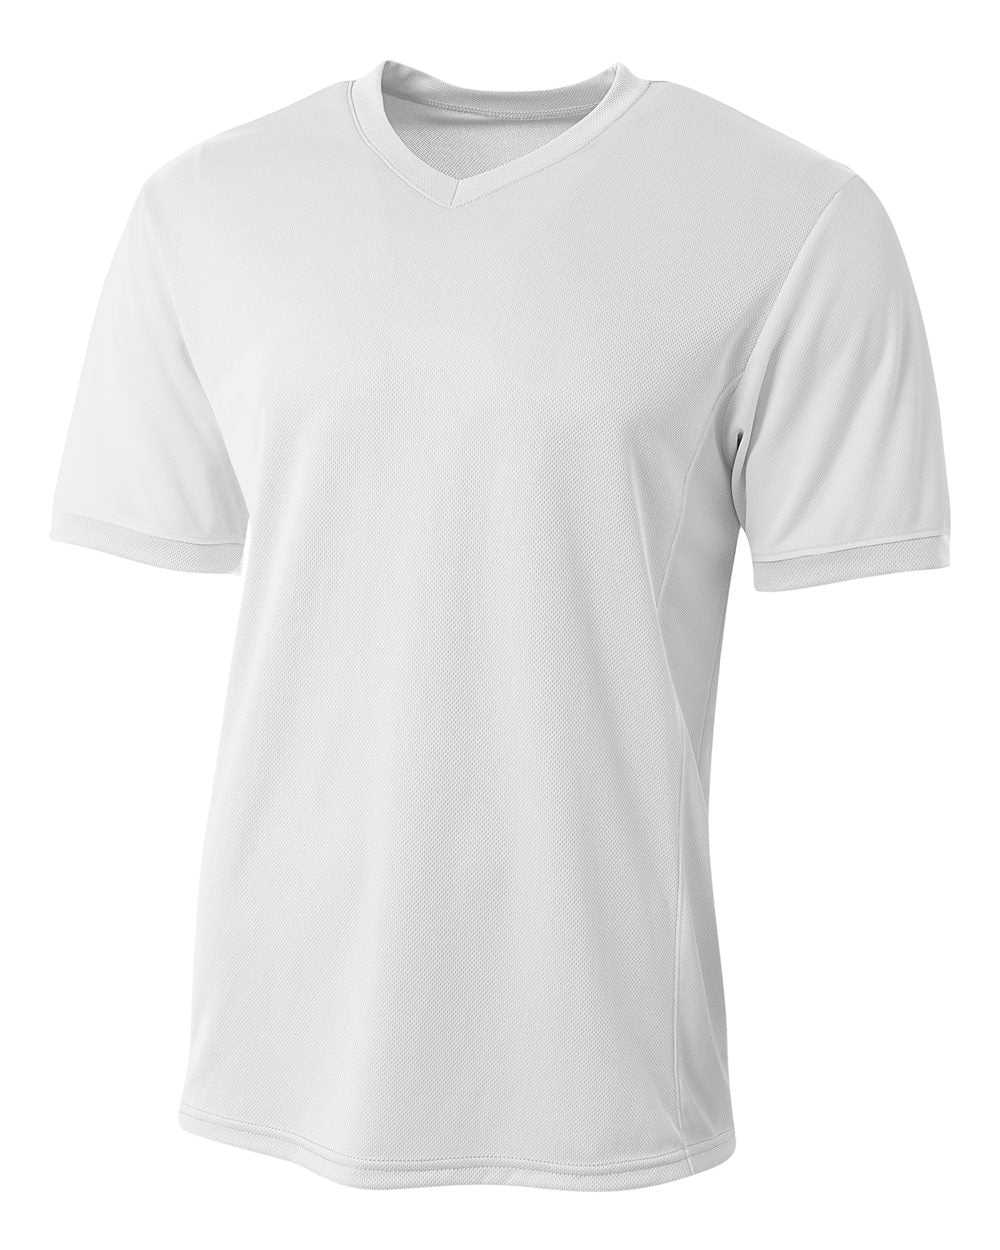 A4 N3017 Premier Soccer Jersey - White - HIT a Double